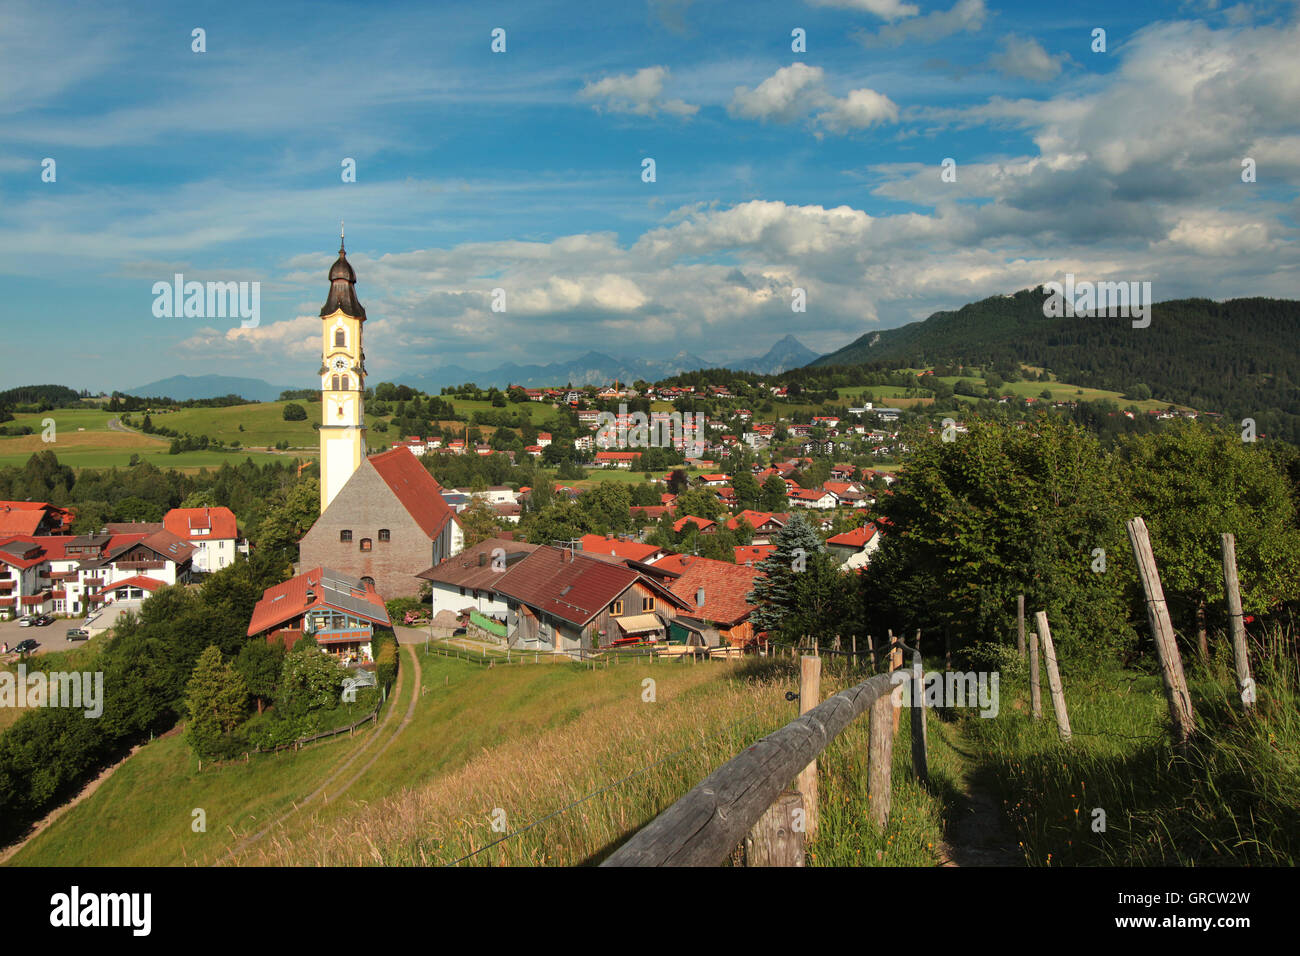 Pfronten Of Bavarian Region Allgaeu In The Alps Stock Photo